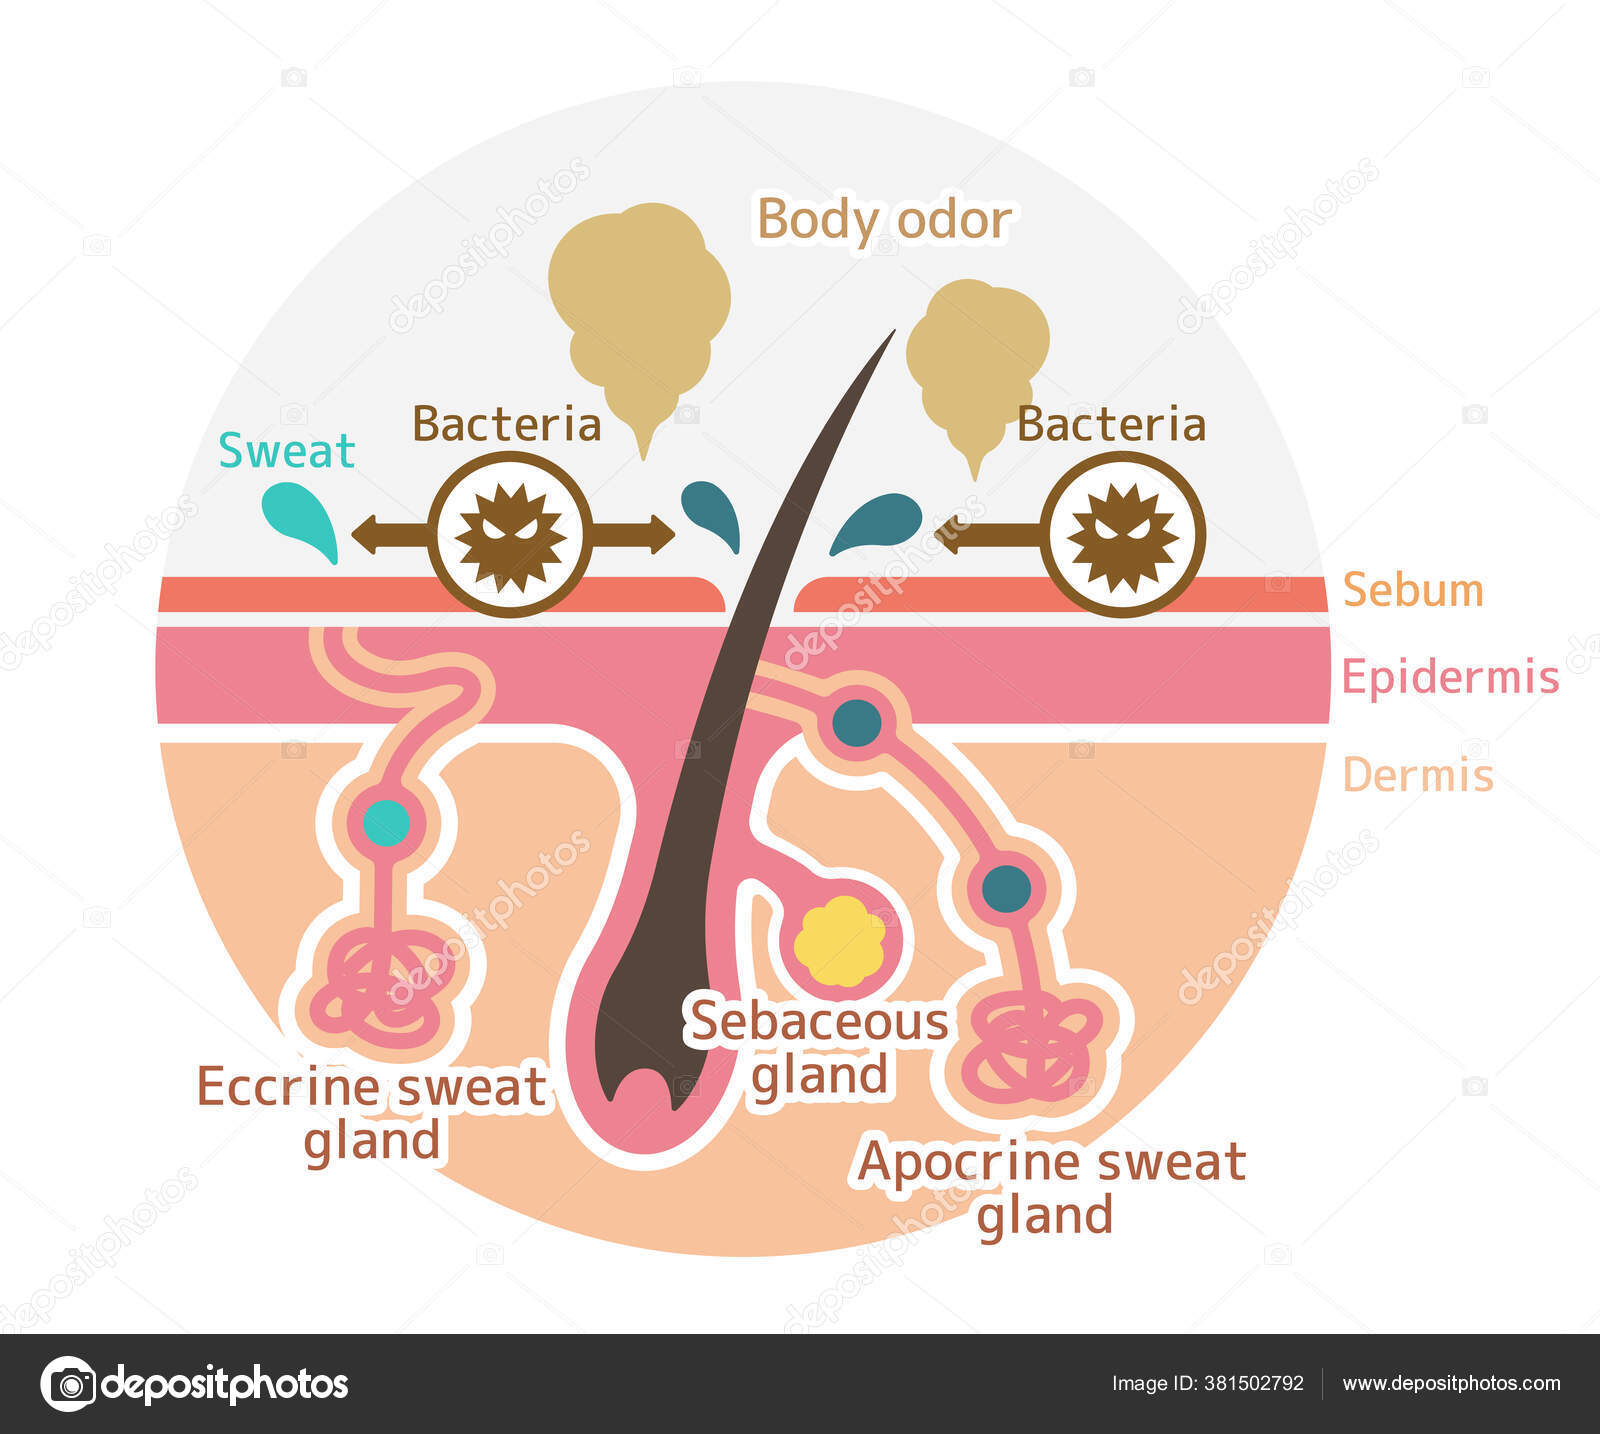 sweat glands in body